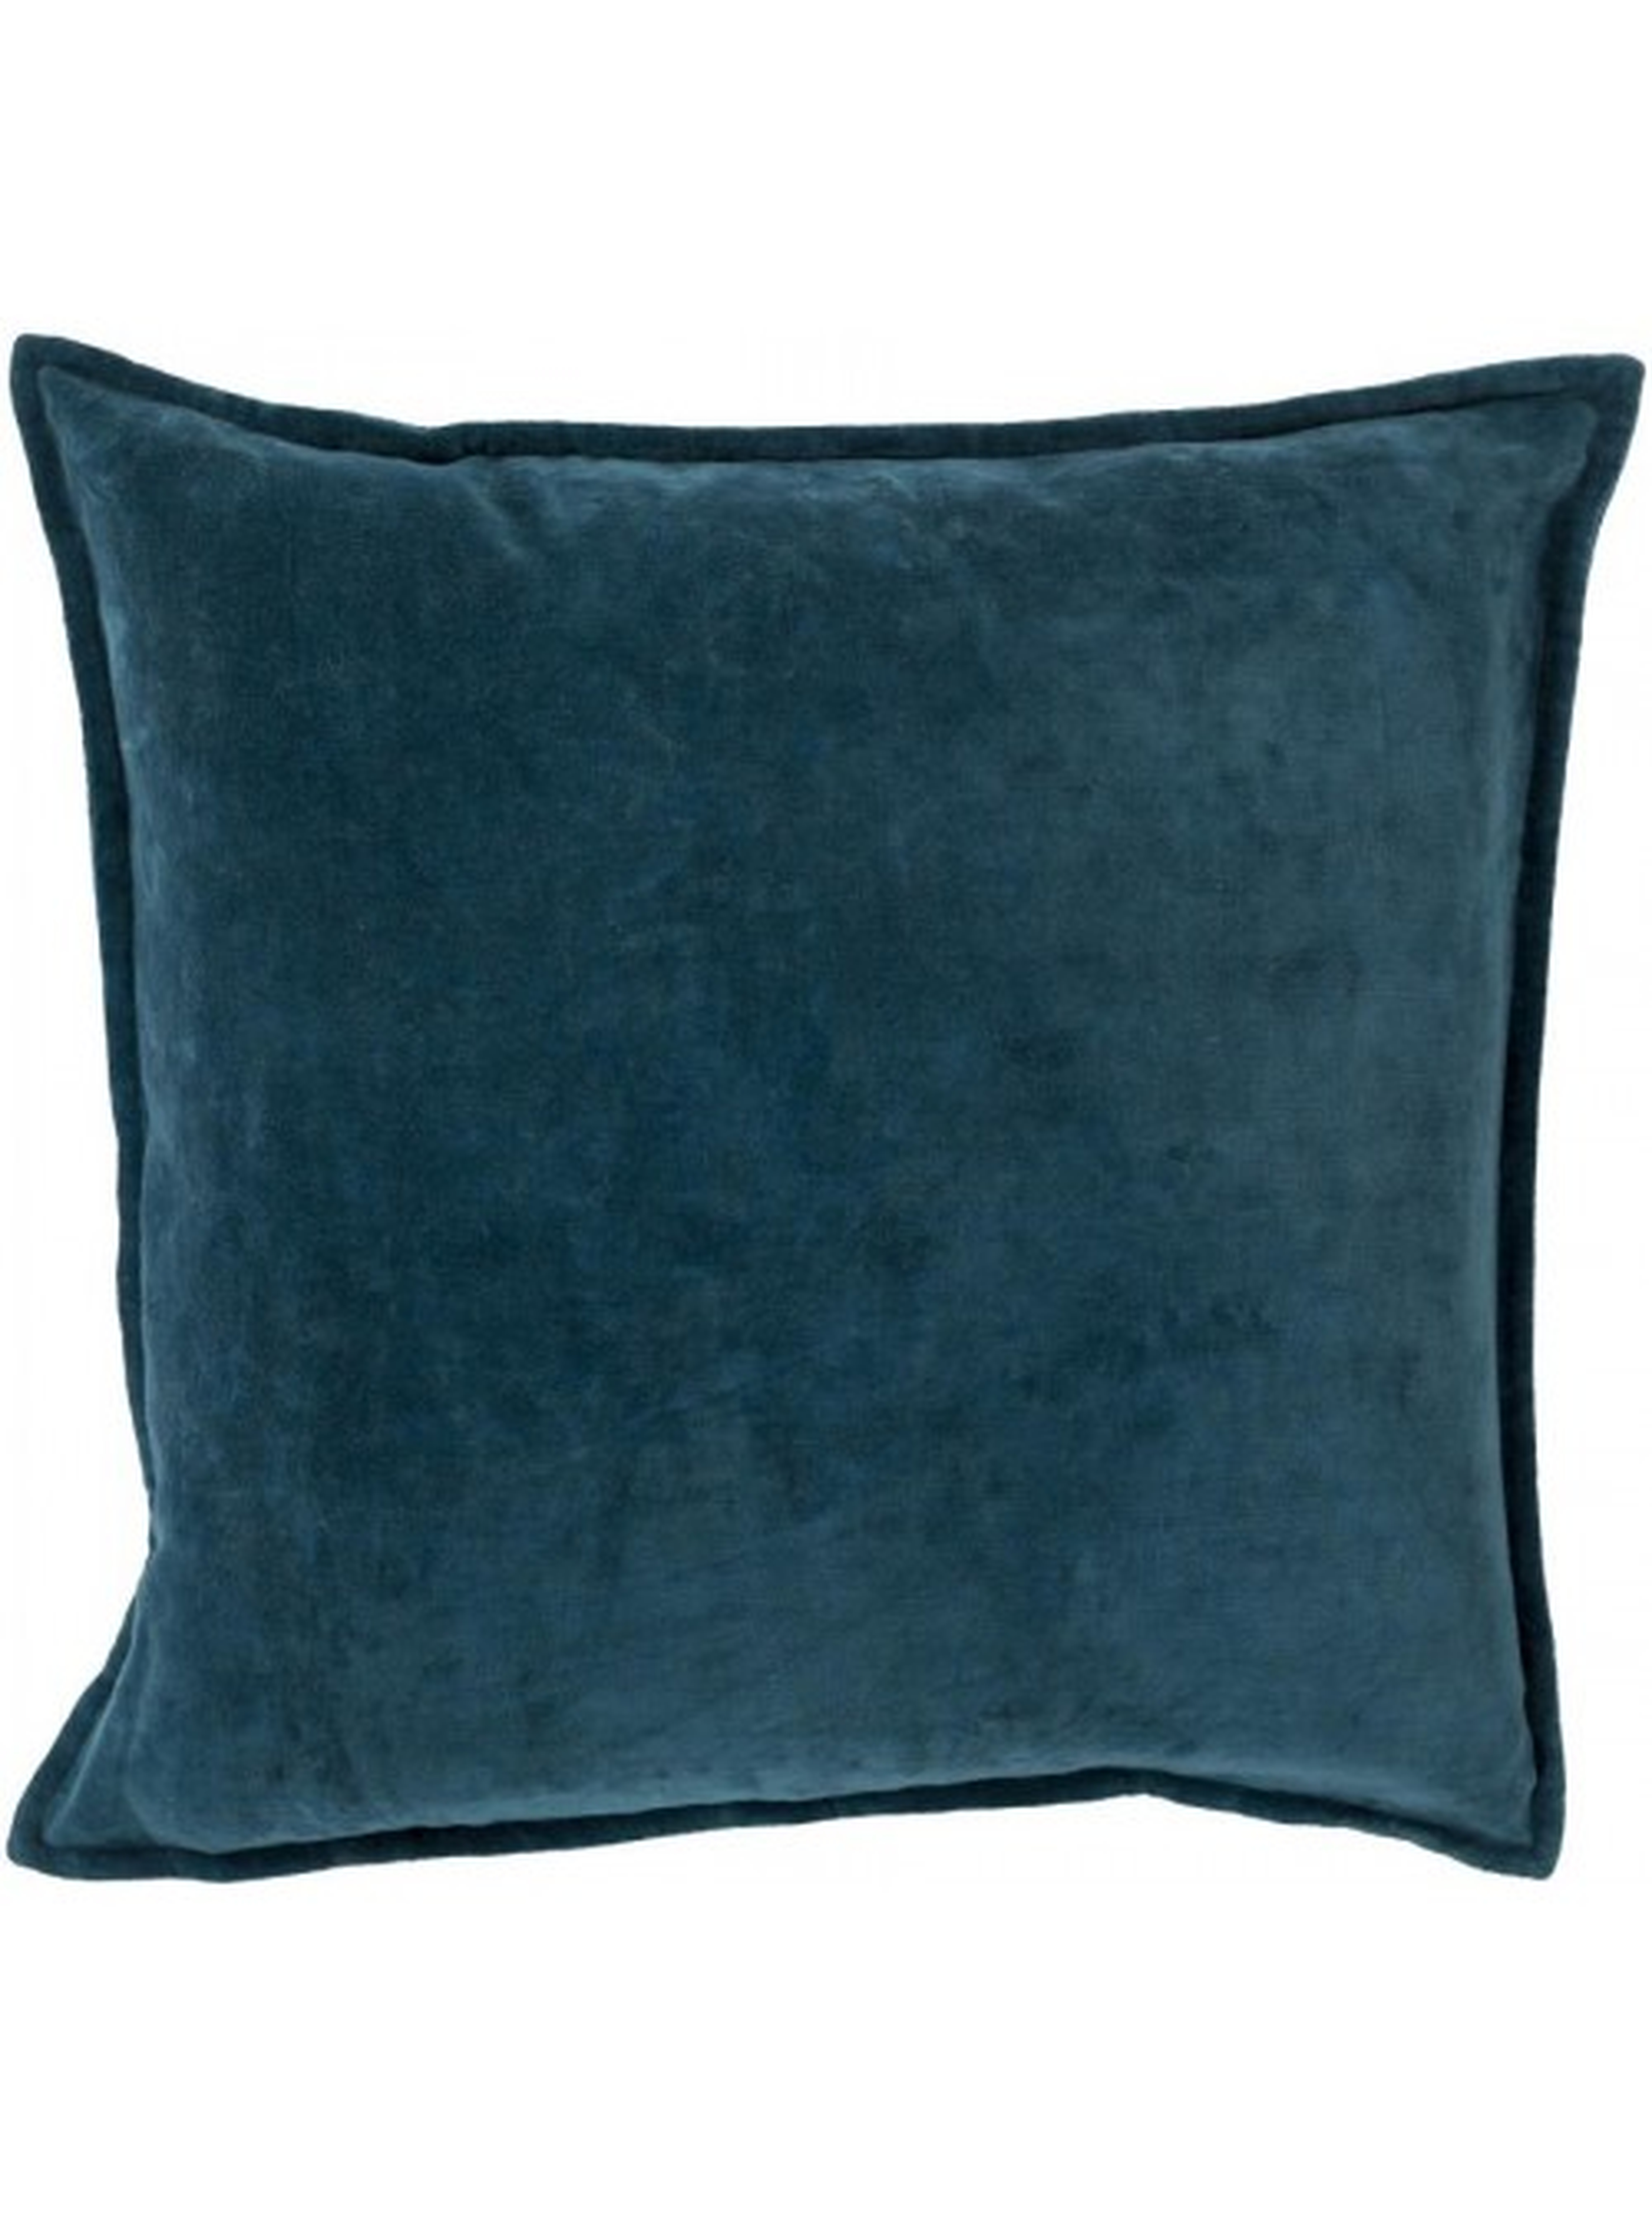 Maxen Pillow - Dark Teal - 18" x 18" - Polyester Filled - Lulu and Georgia